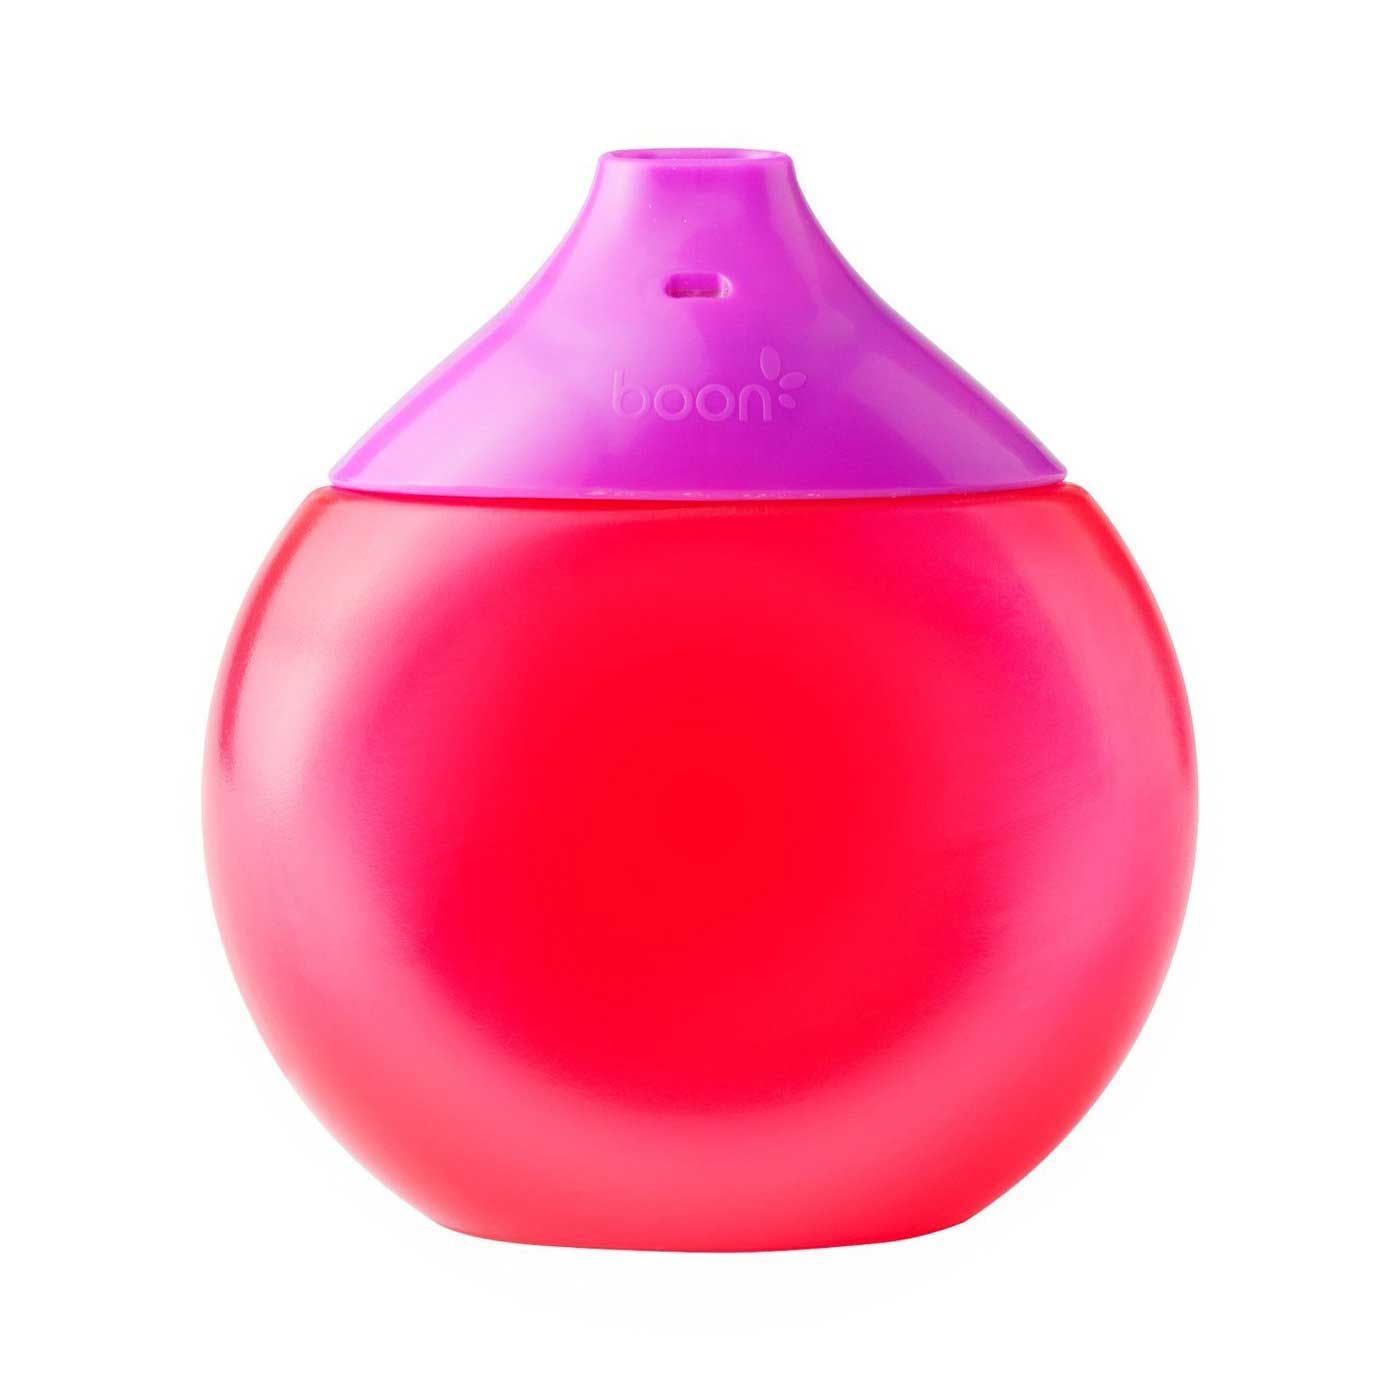 Boon New Fluid (Pink-Magenta) - 11058 - 1